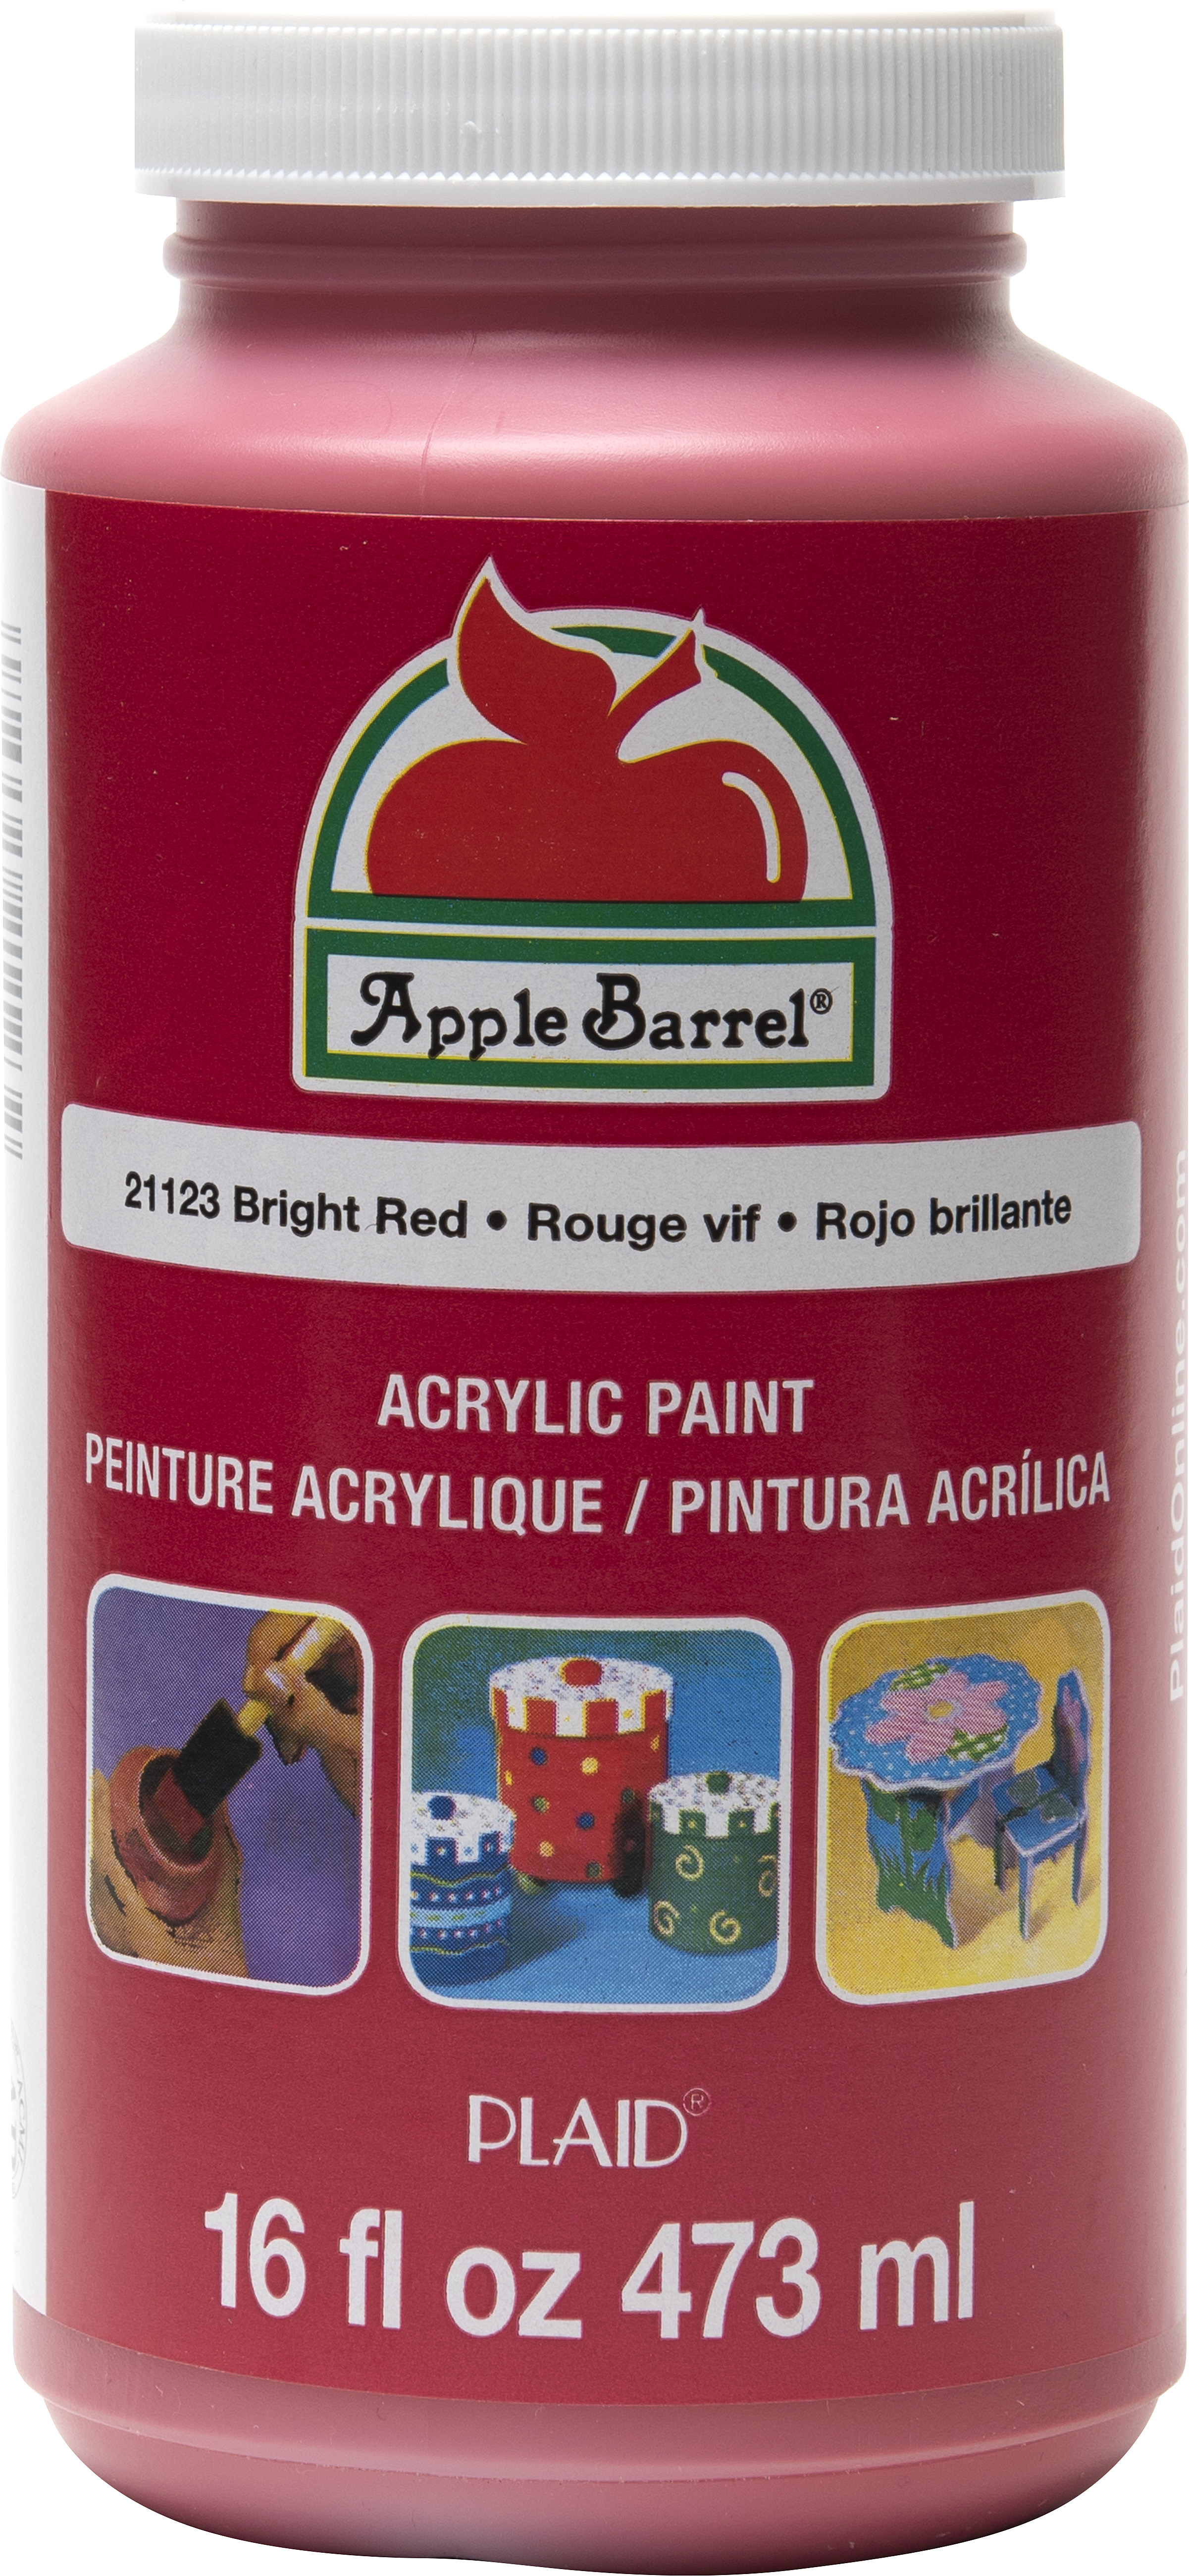 Apple Barrel 21123E Acrylic Craft Paint, Matte Finish, Bright Red, 16 fl oz - image 1 of 8